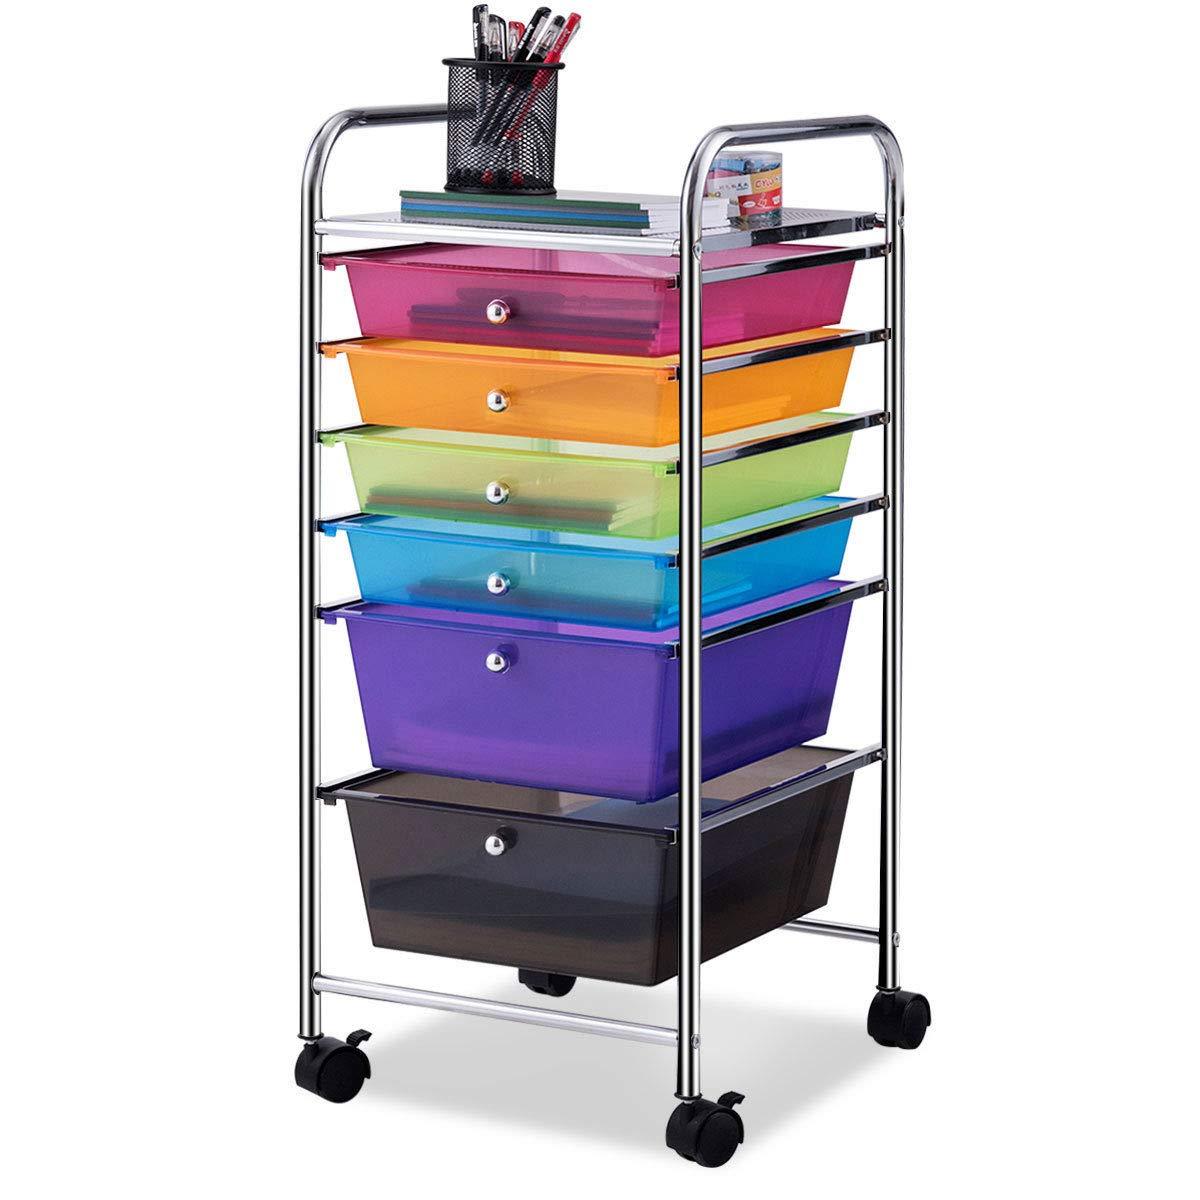 Giantex 6 Storage Drawer Cart Rolling Organizer Cart for Tools Scrapbook Paper Home Office School Multipurpose Mobile Utility Cart